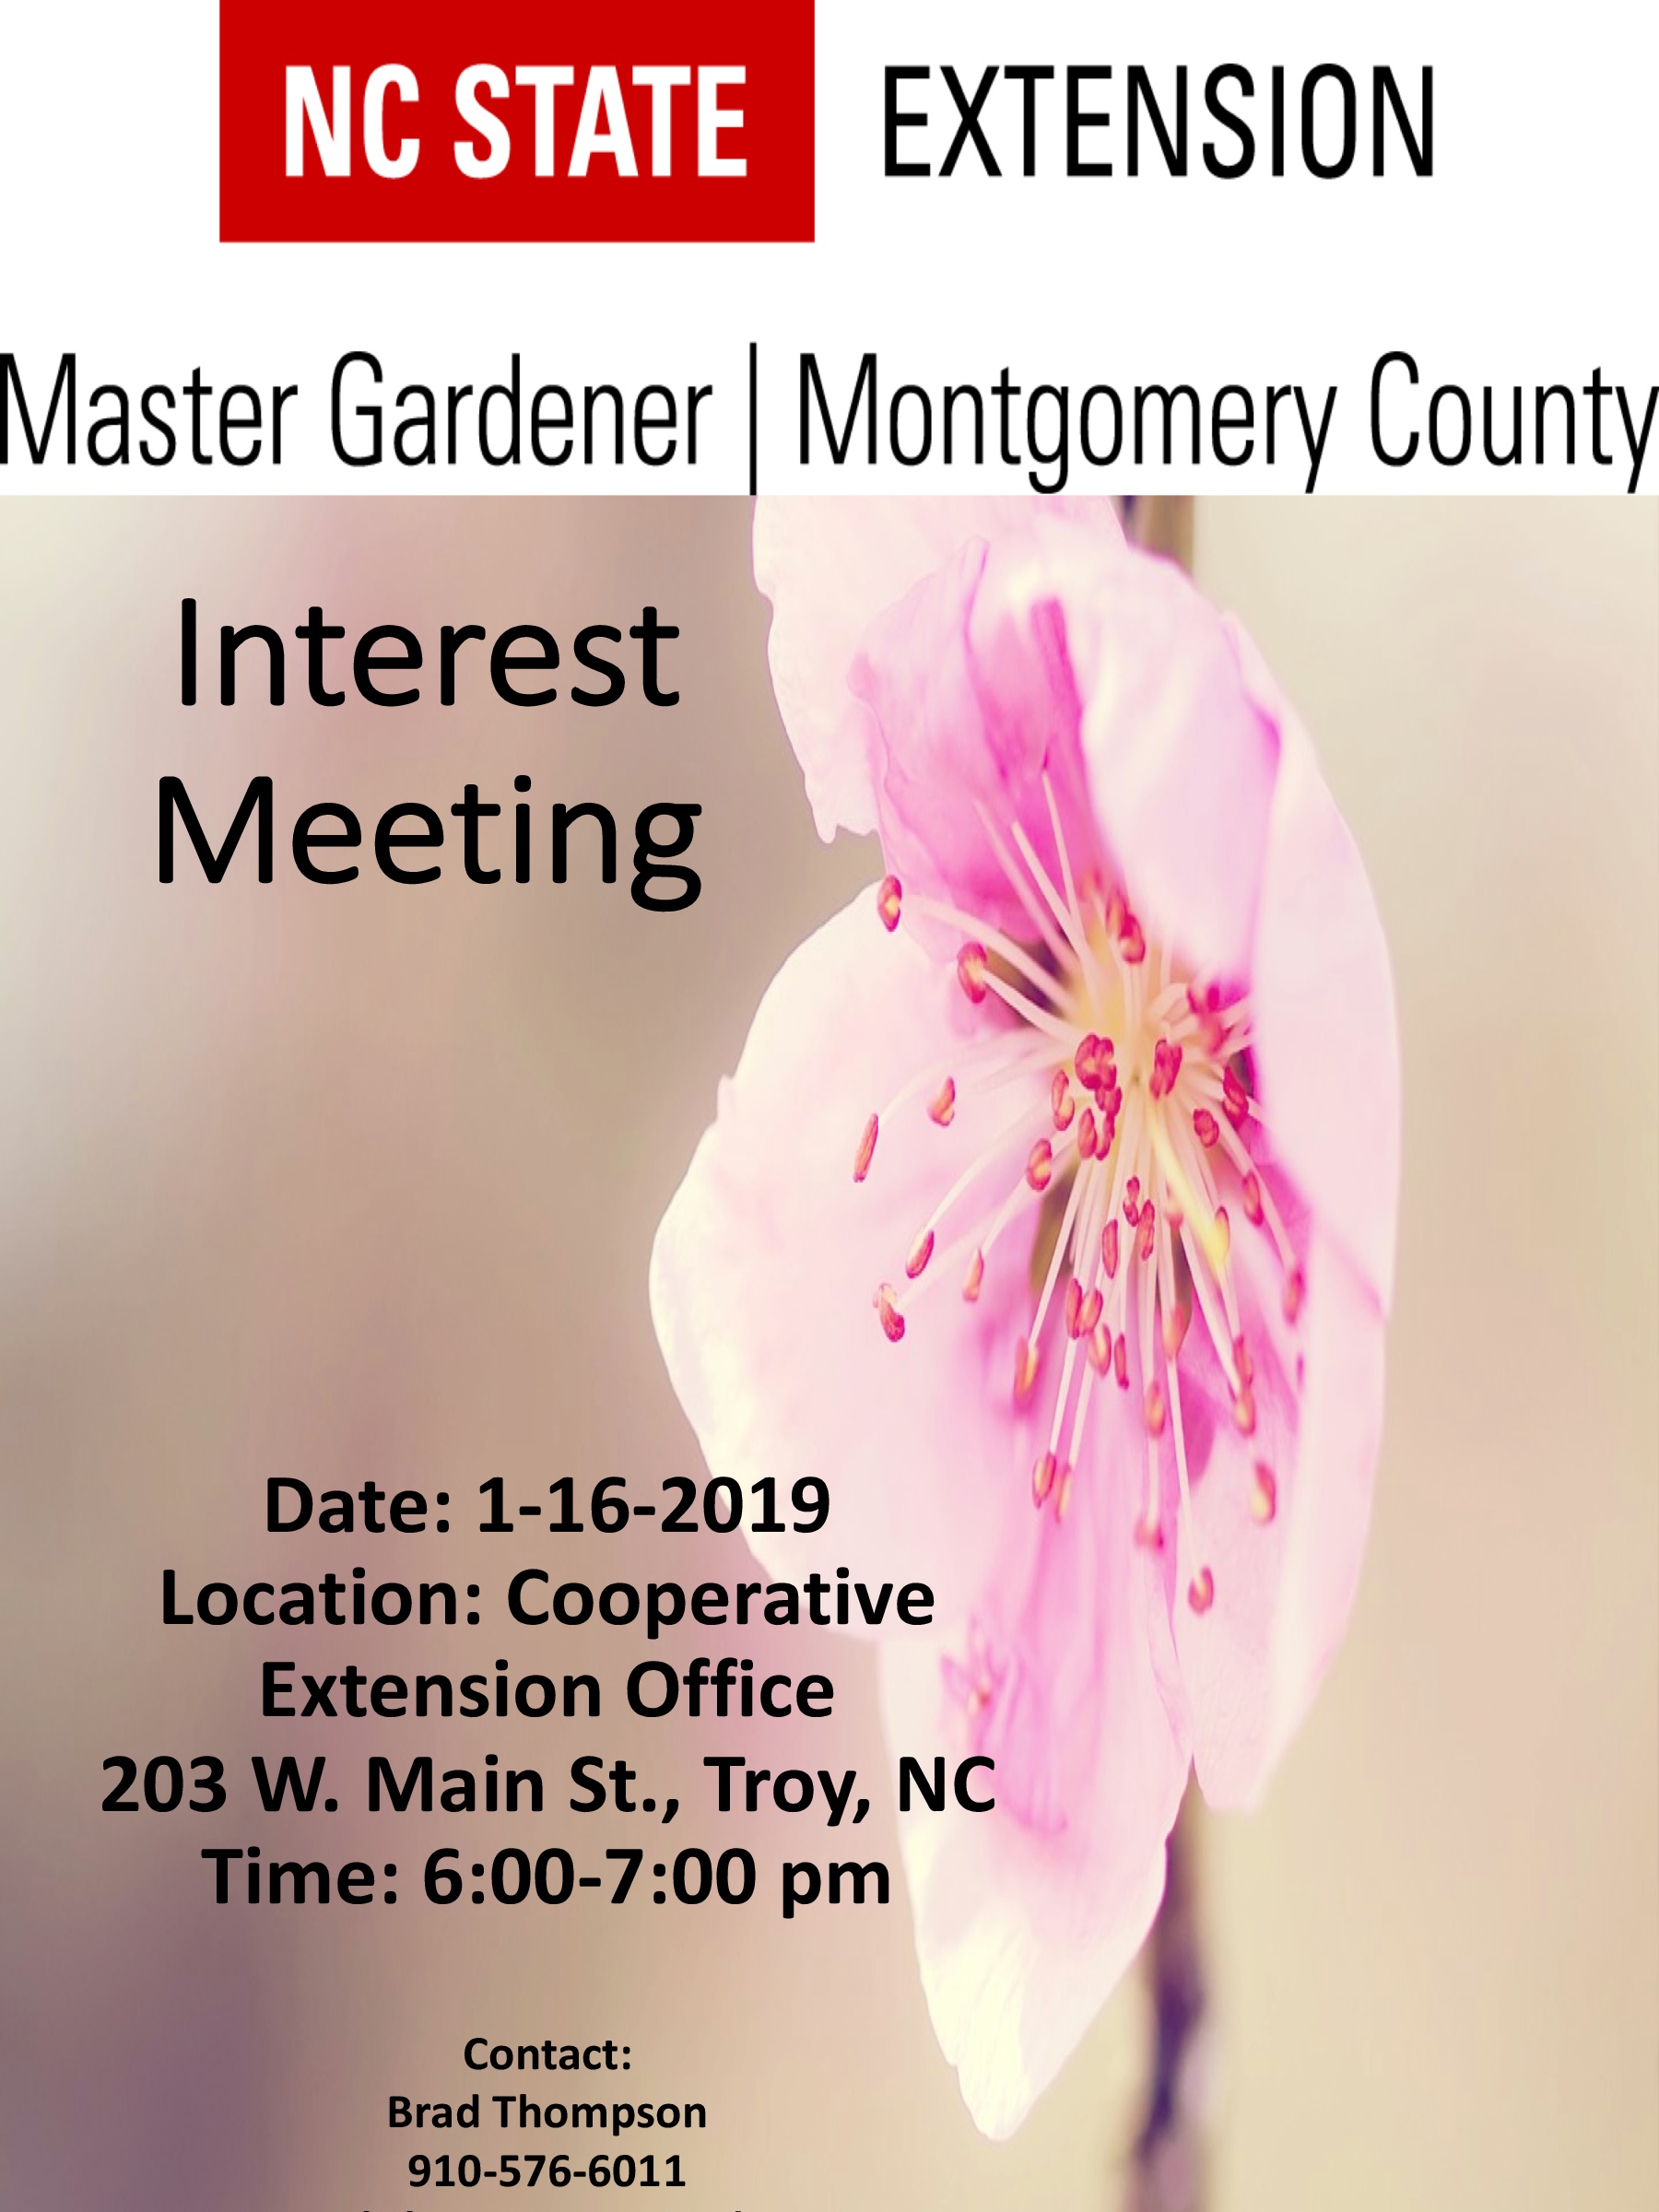 Master Gardener Interest Meeting